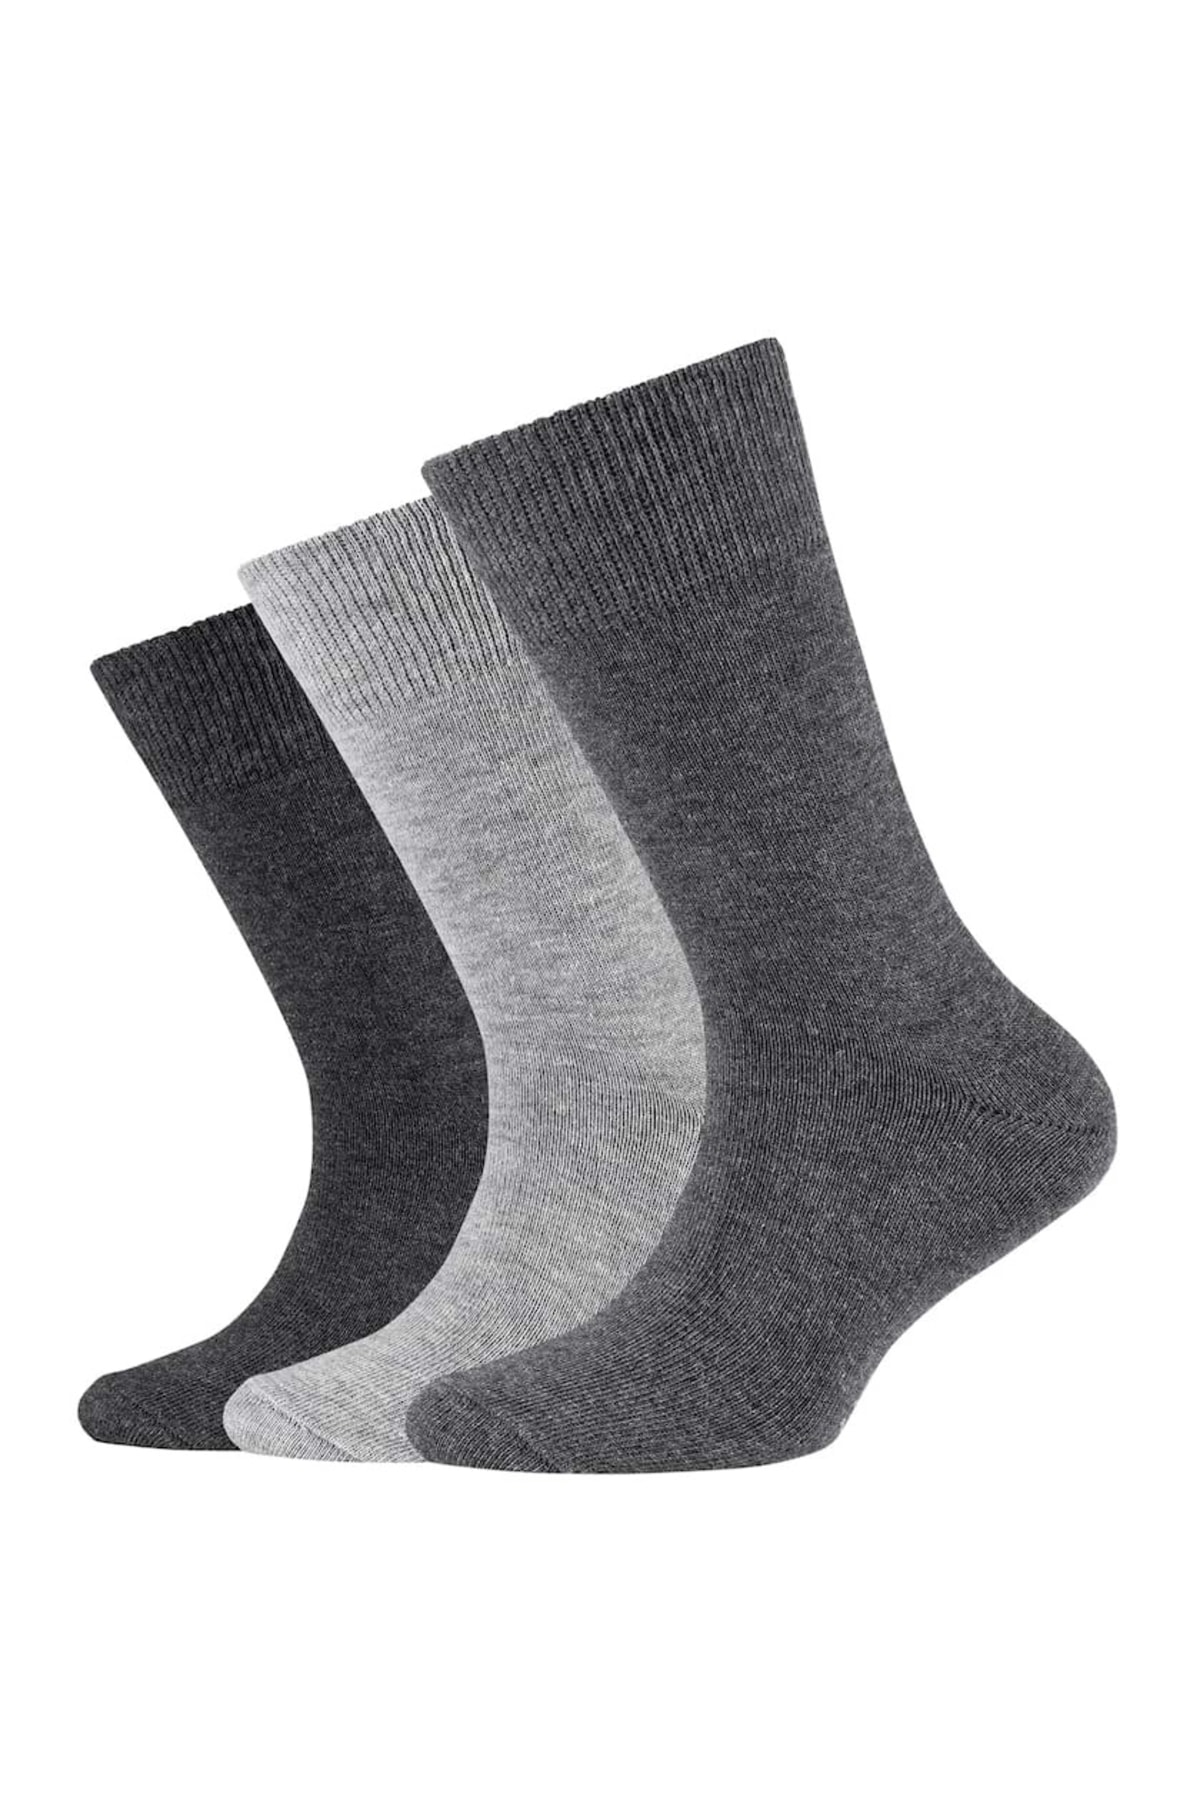 S. OLİVER Socken Mehrfarbig Casual